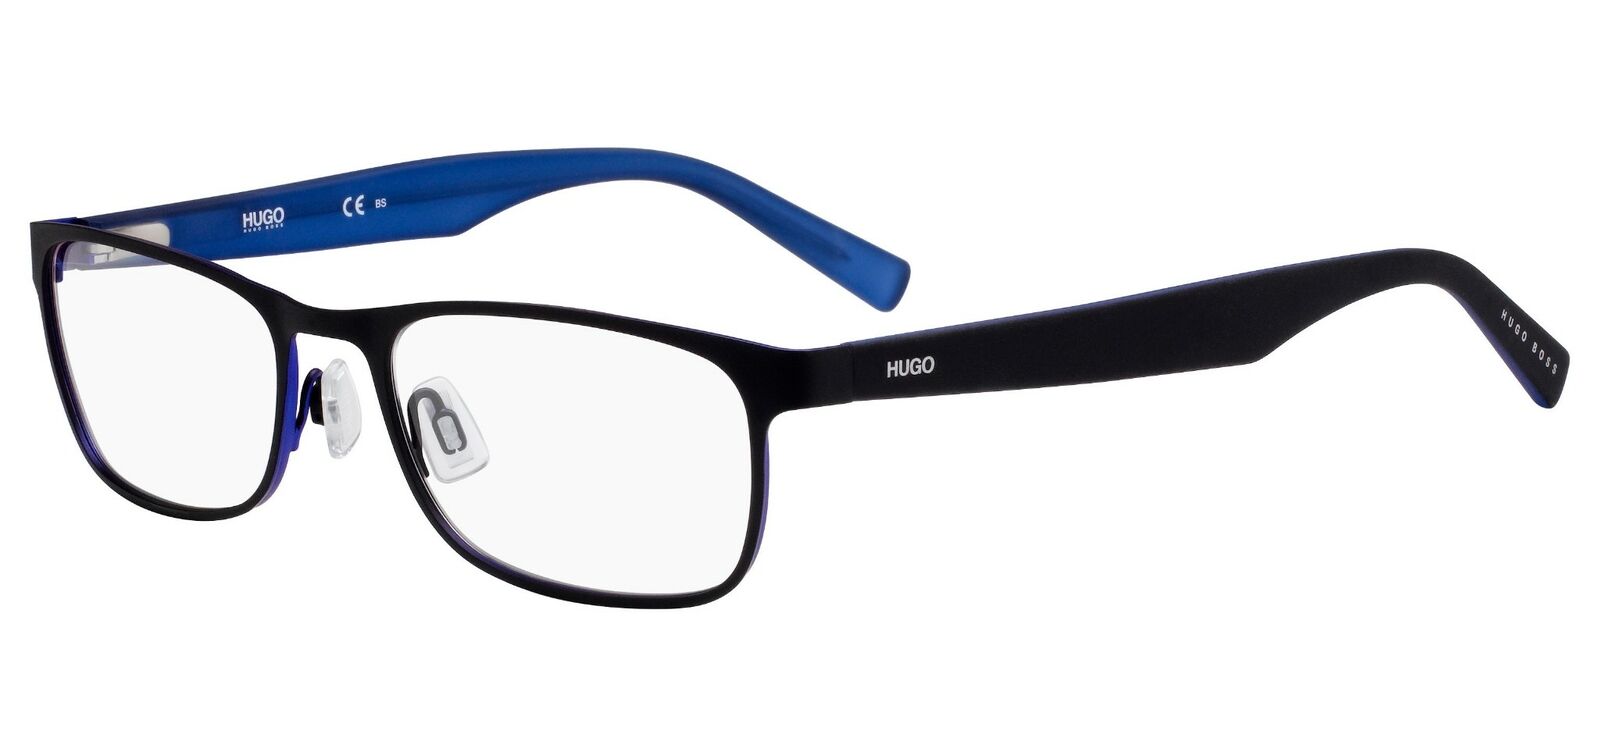 Hugo 0209 00VK Matte Black Blue Eyeglasses